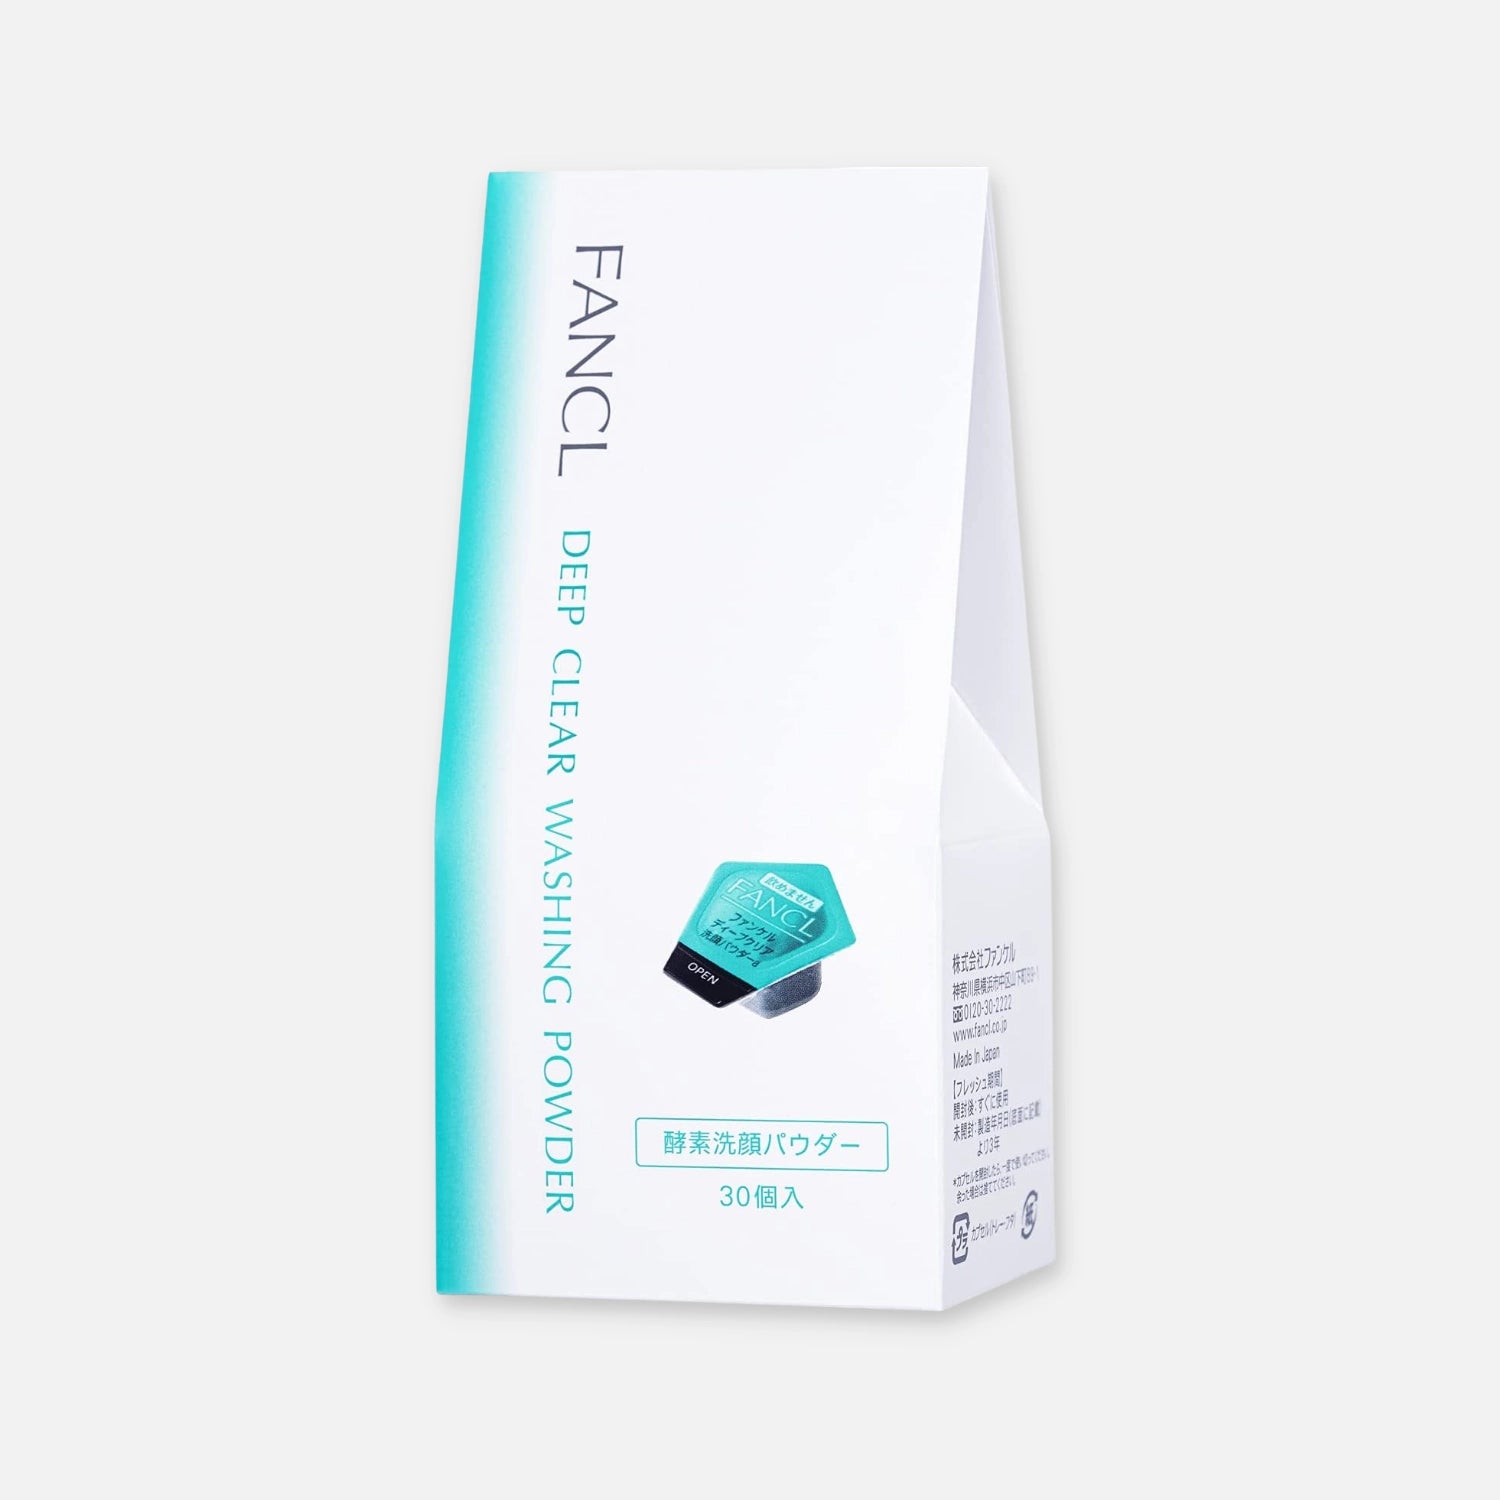 Fancl Deep Clear Washing Powder (30 Units) - Buy Me Japan